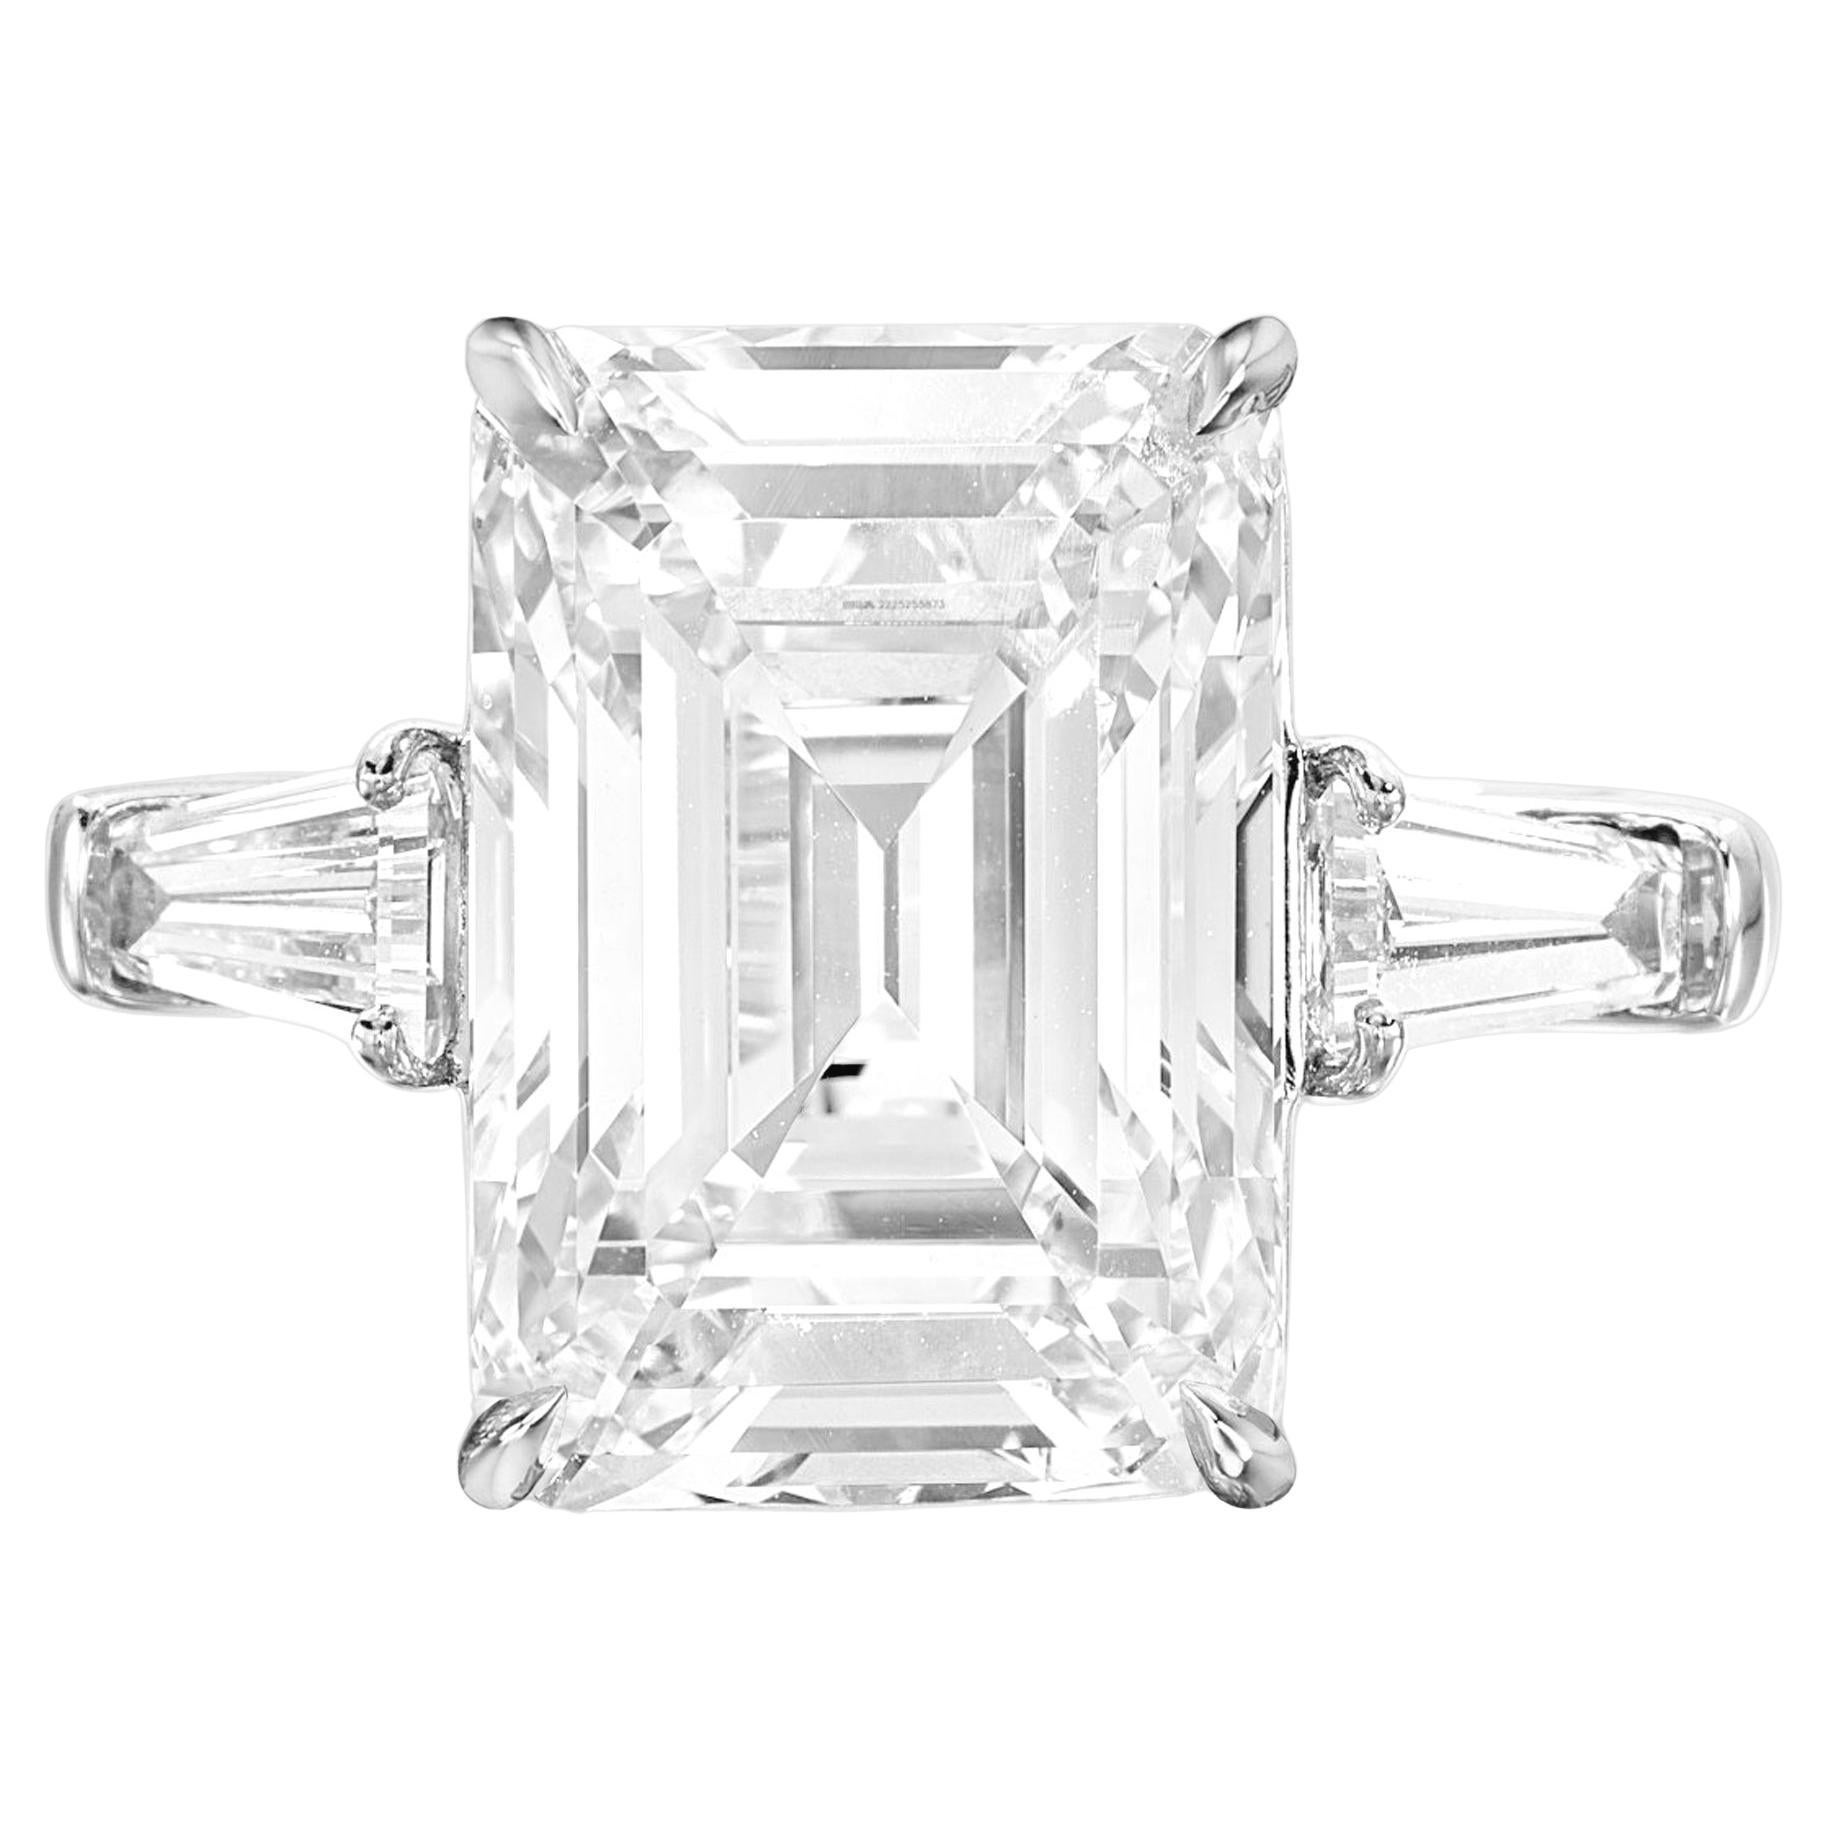 GIA Certified 7 Carat Emerald Cut Diamond Ring Flawless D Golconda Type 2A